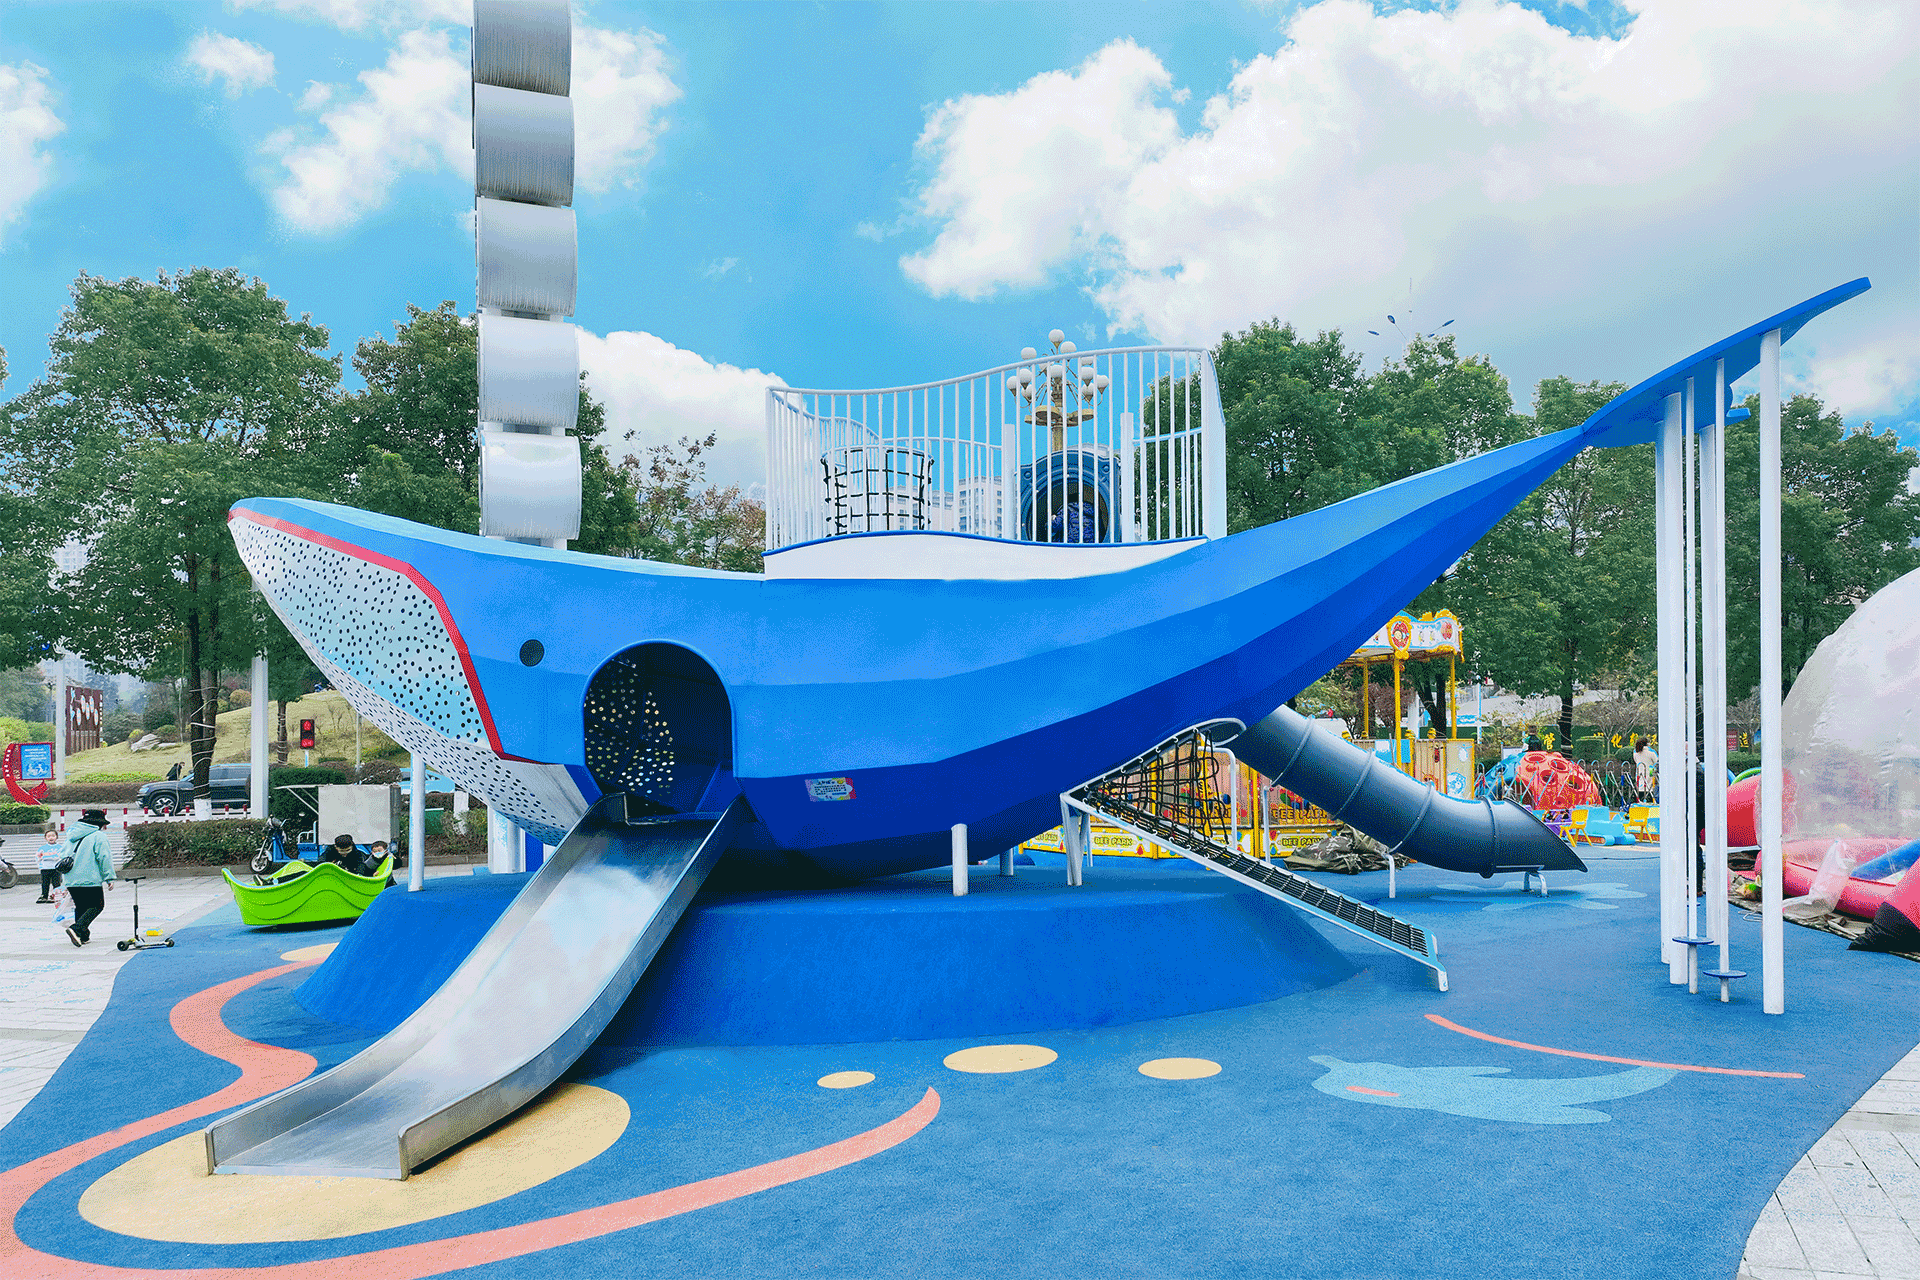 Aegean Sea City Square Children's Play Park